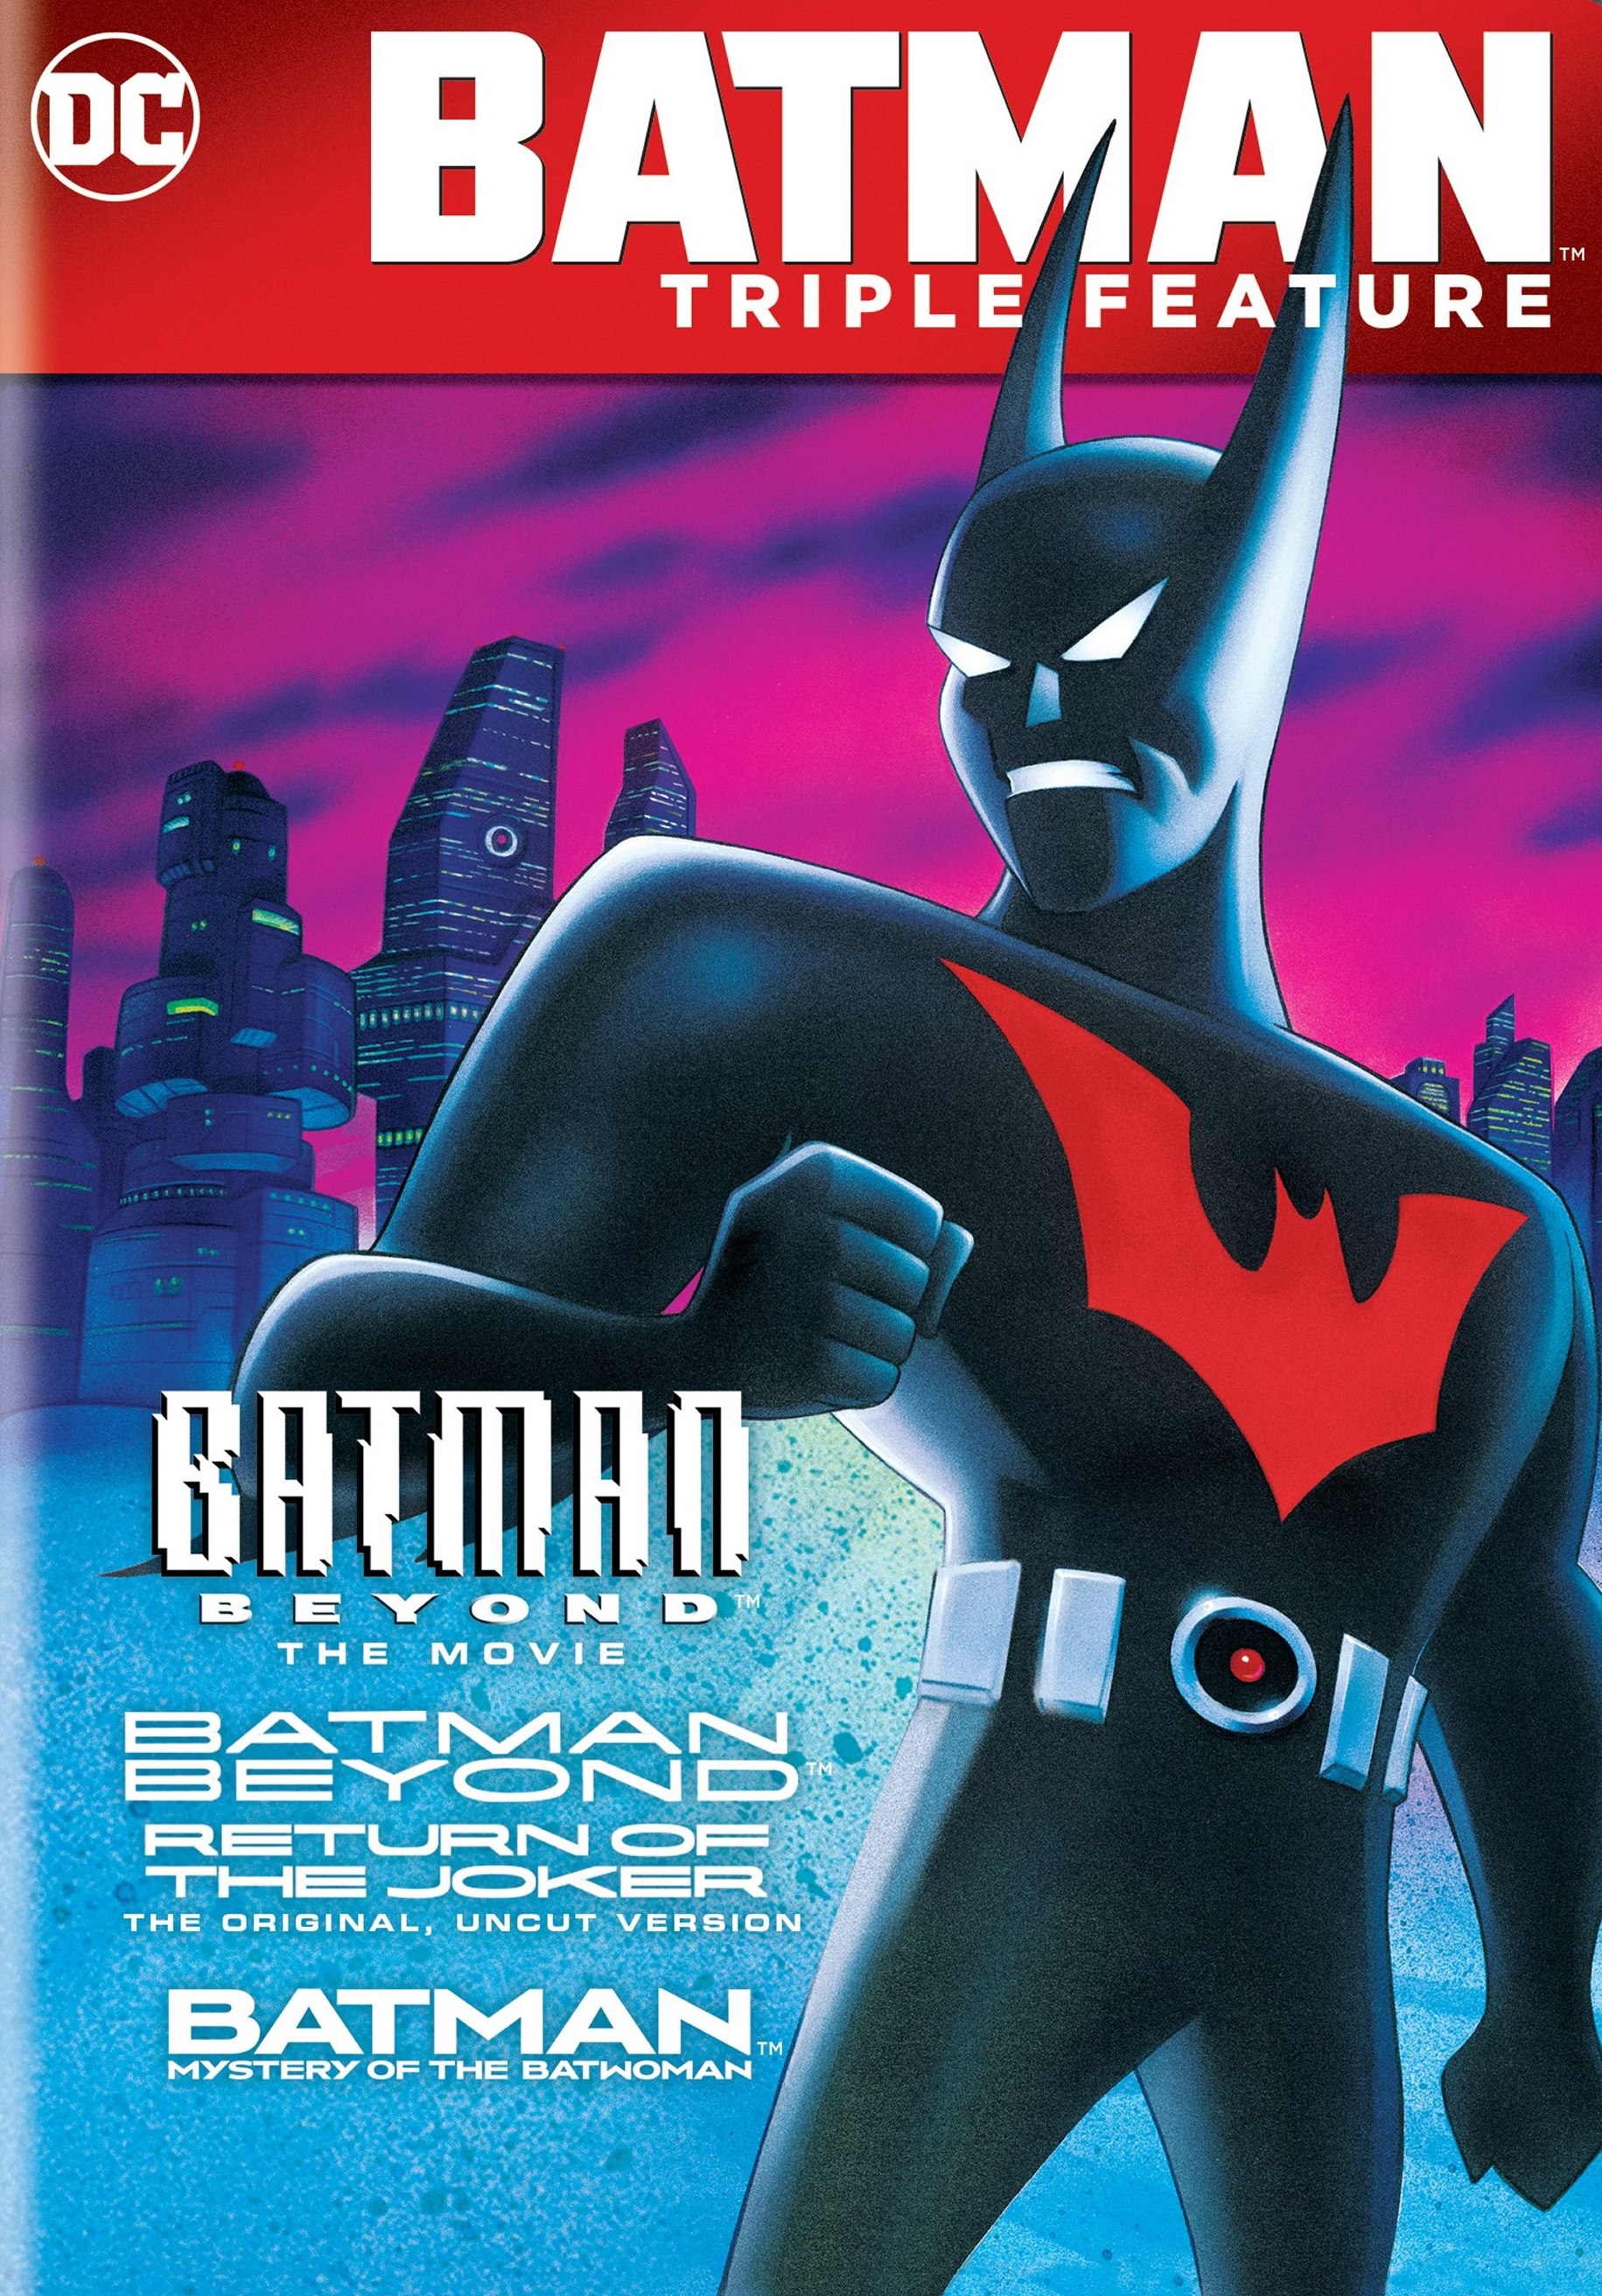 batman beyond movie poster